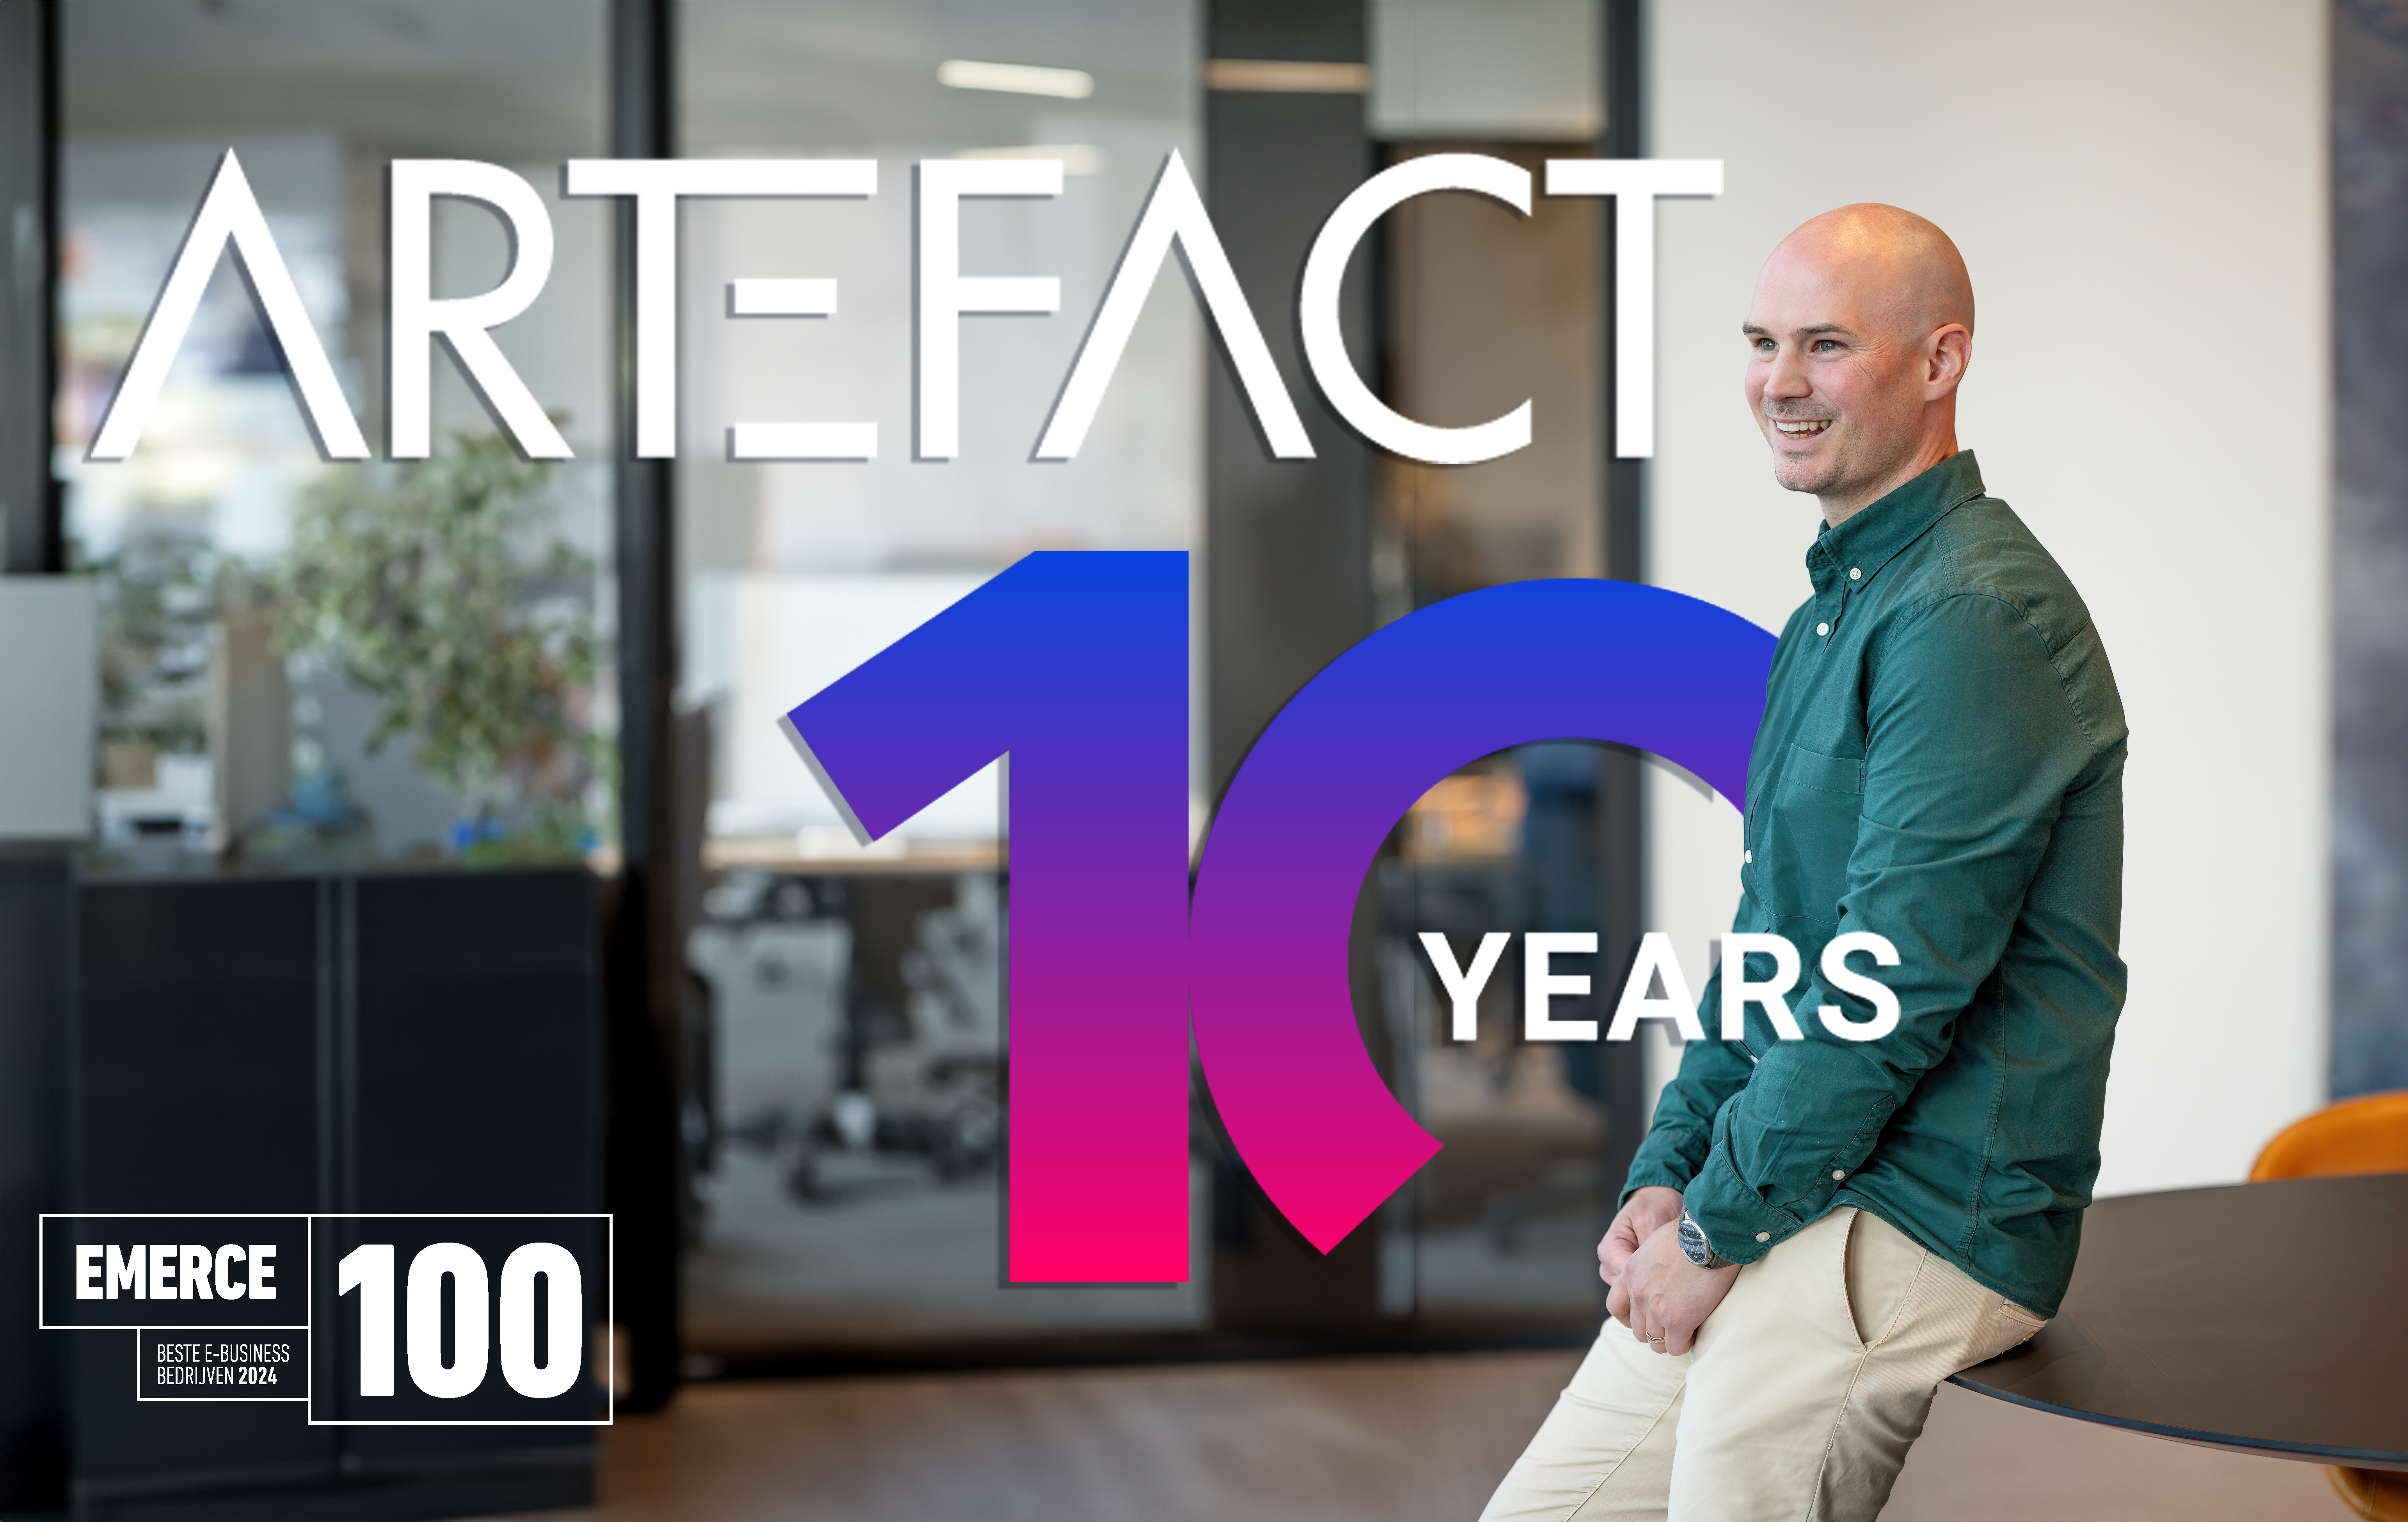 Artefact Benelux achieves 4.5 stars for best Digital Marketing Agency in Emerce100